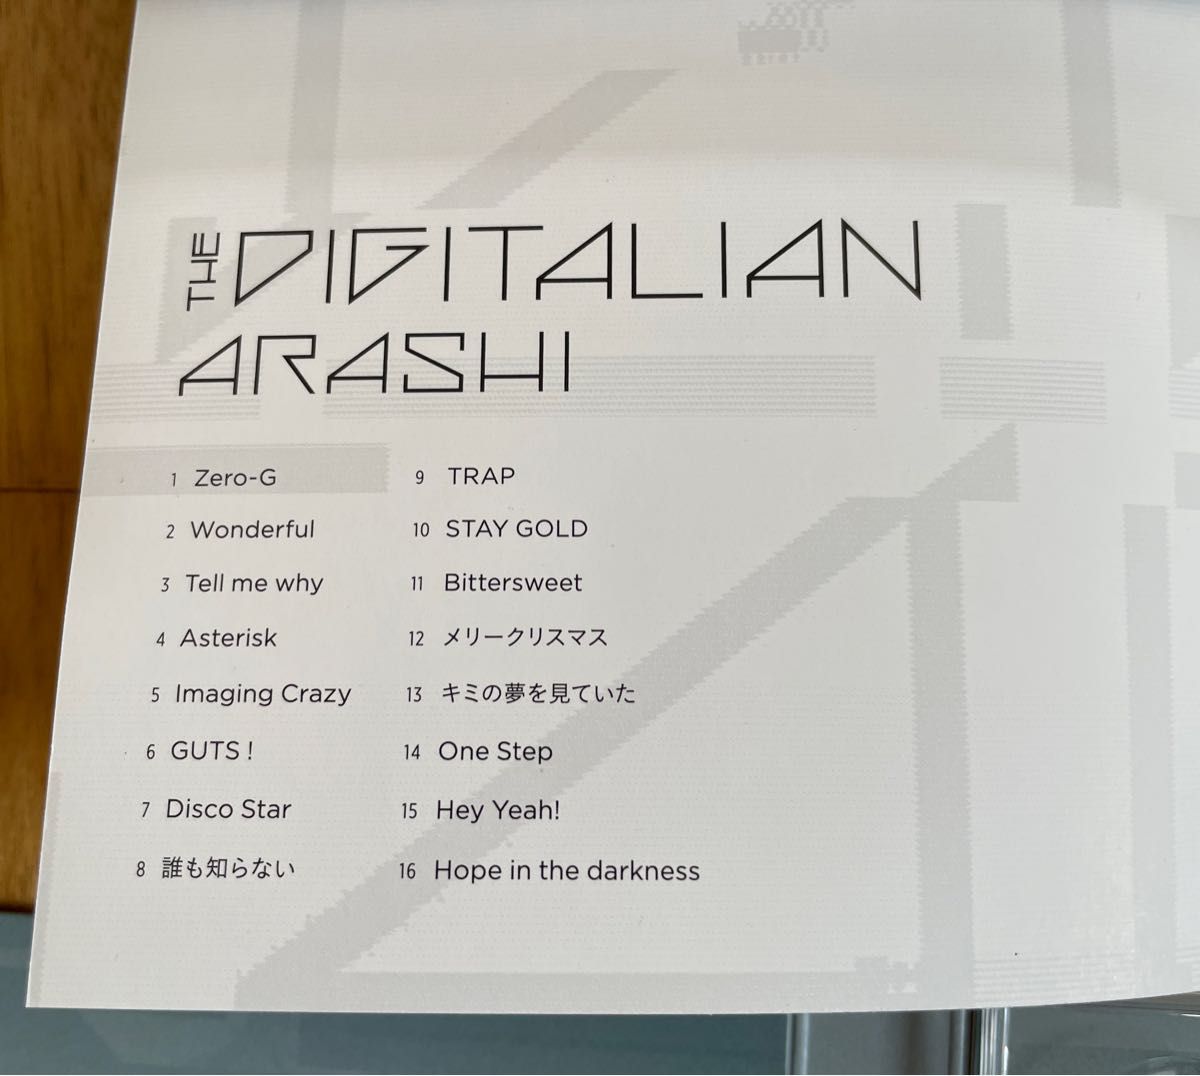 嵐 ARASHI THE DIGITALIAN  初回限定盤 CD+DVD